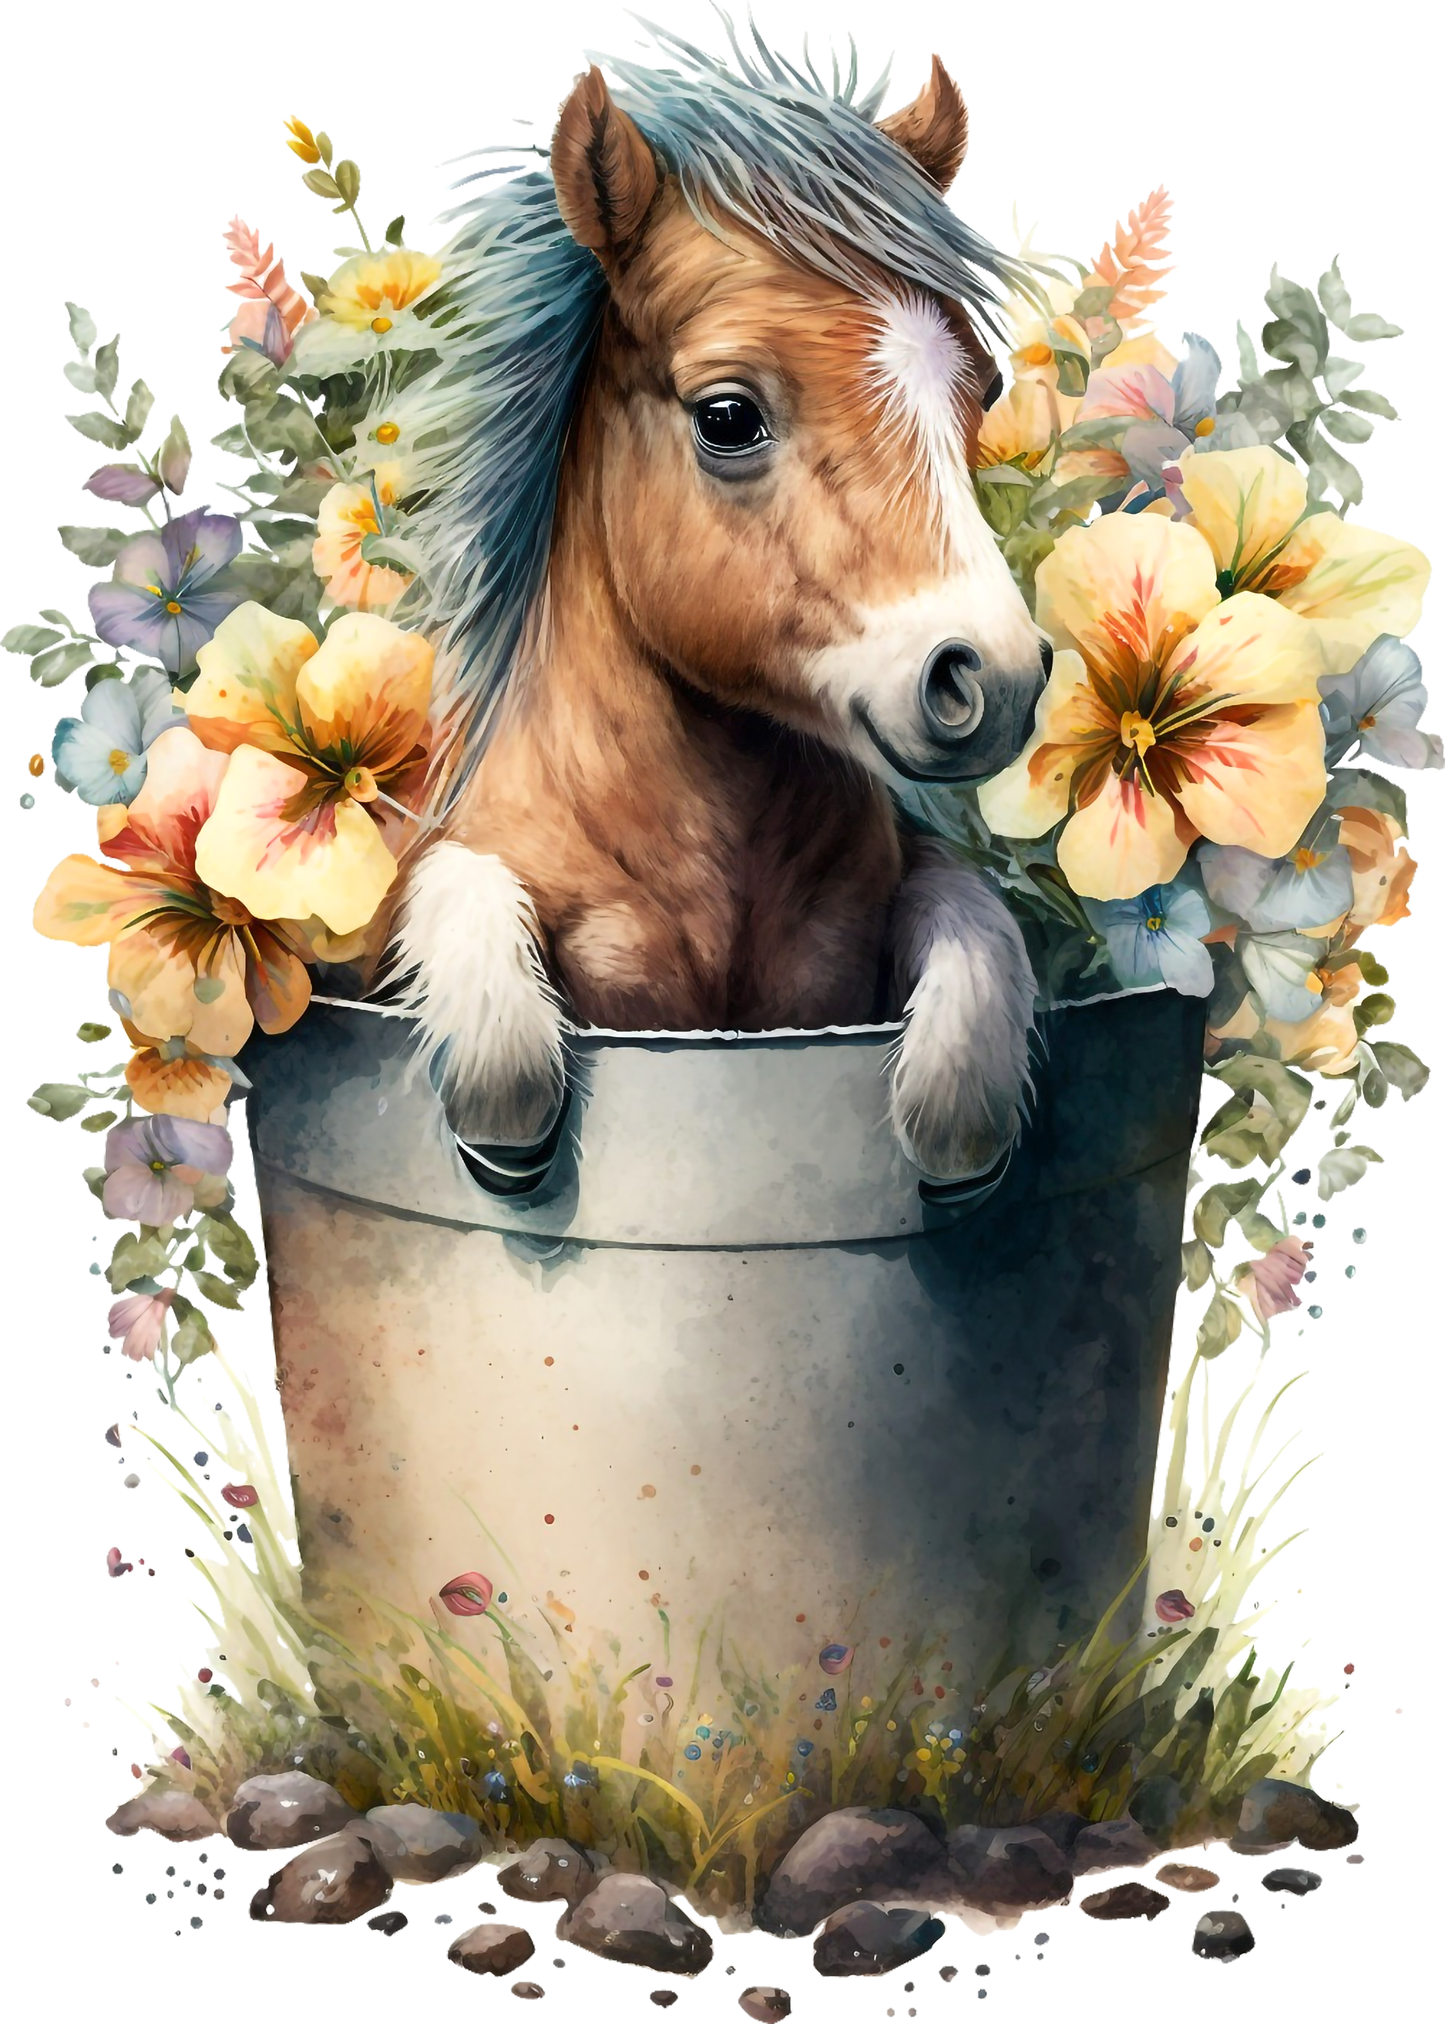 Pony in a water bucket